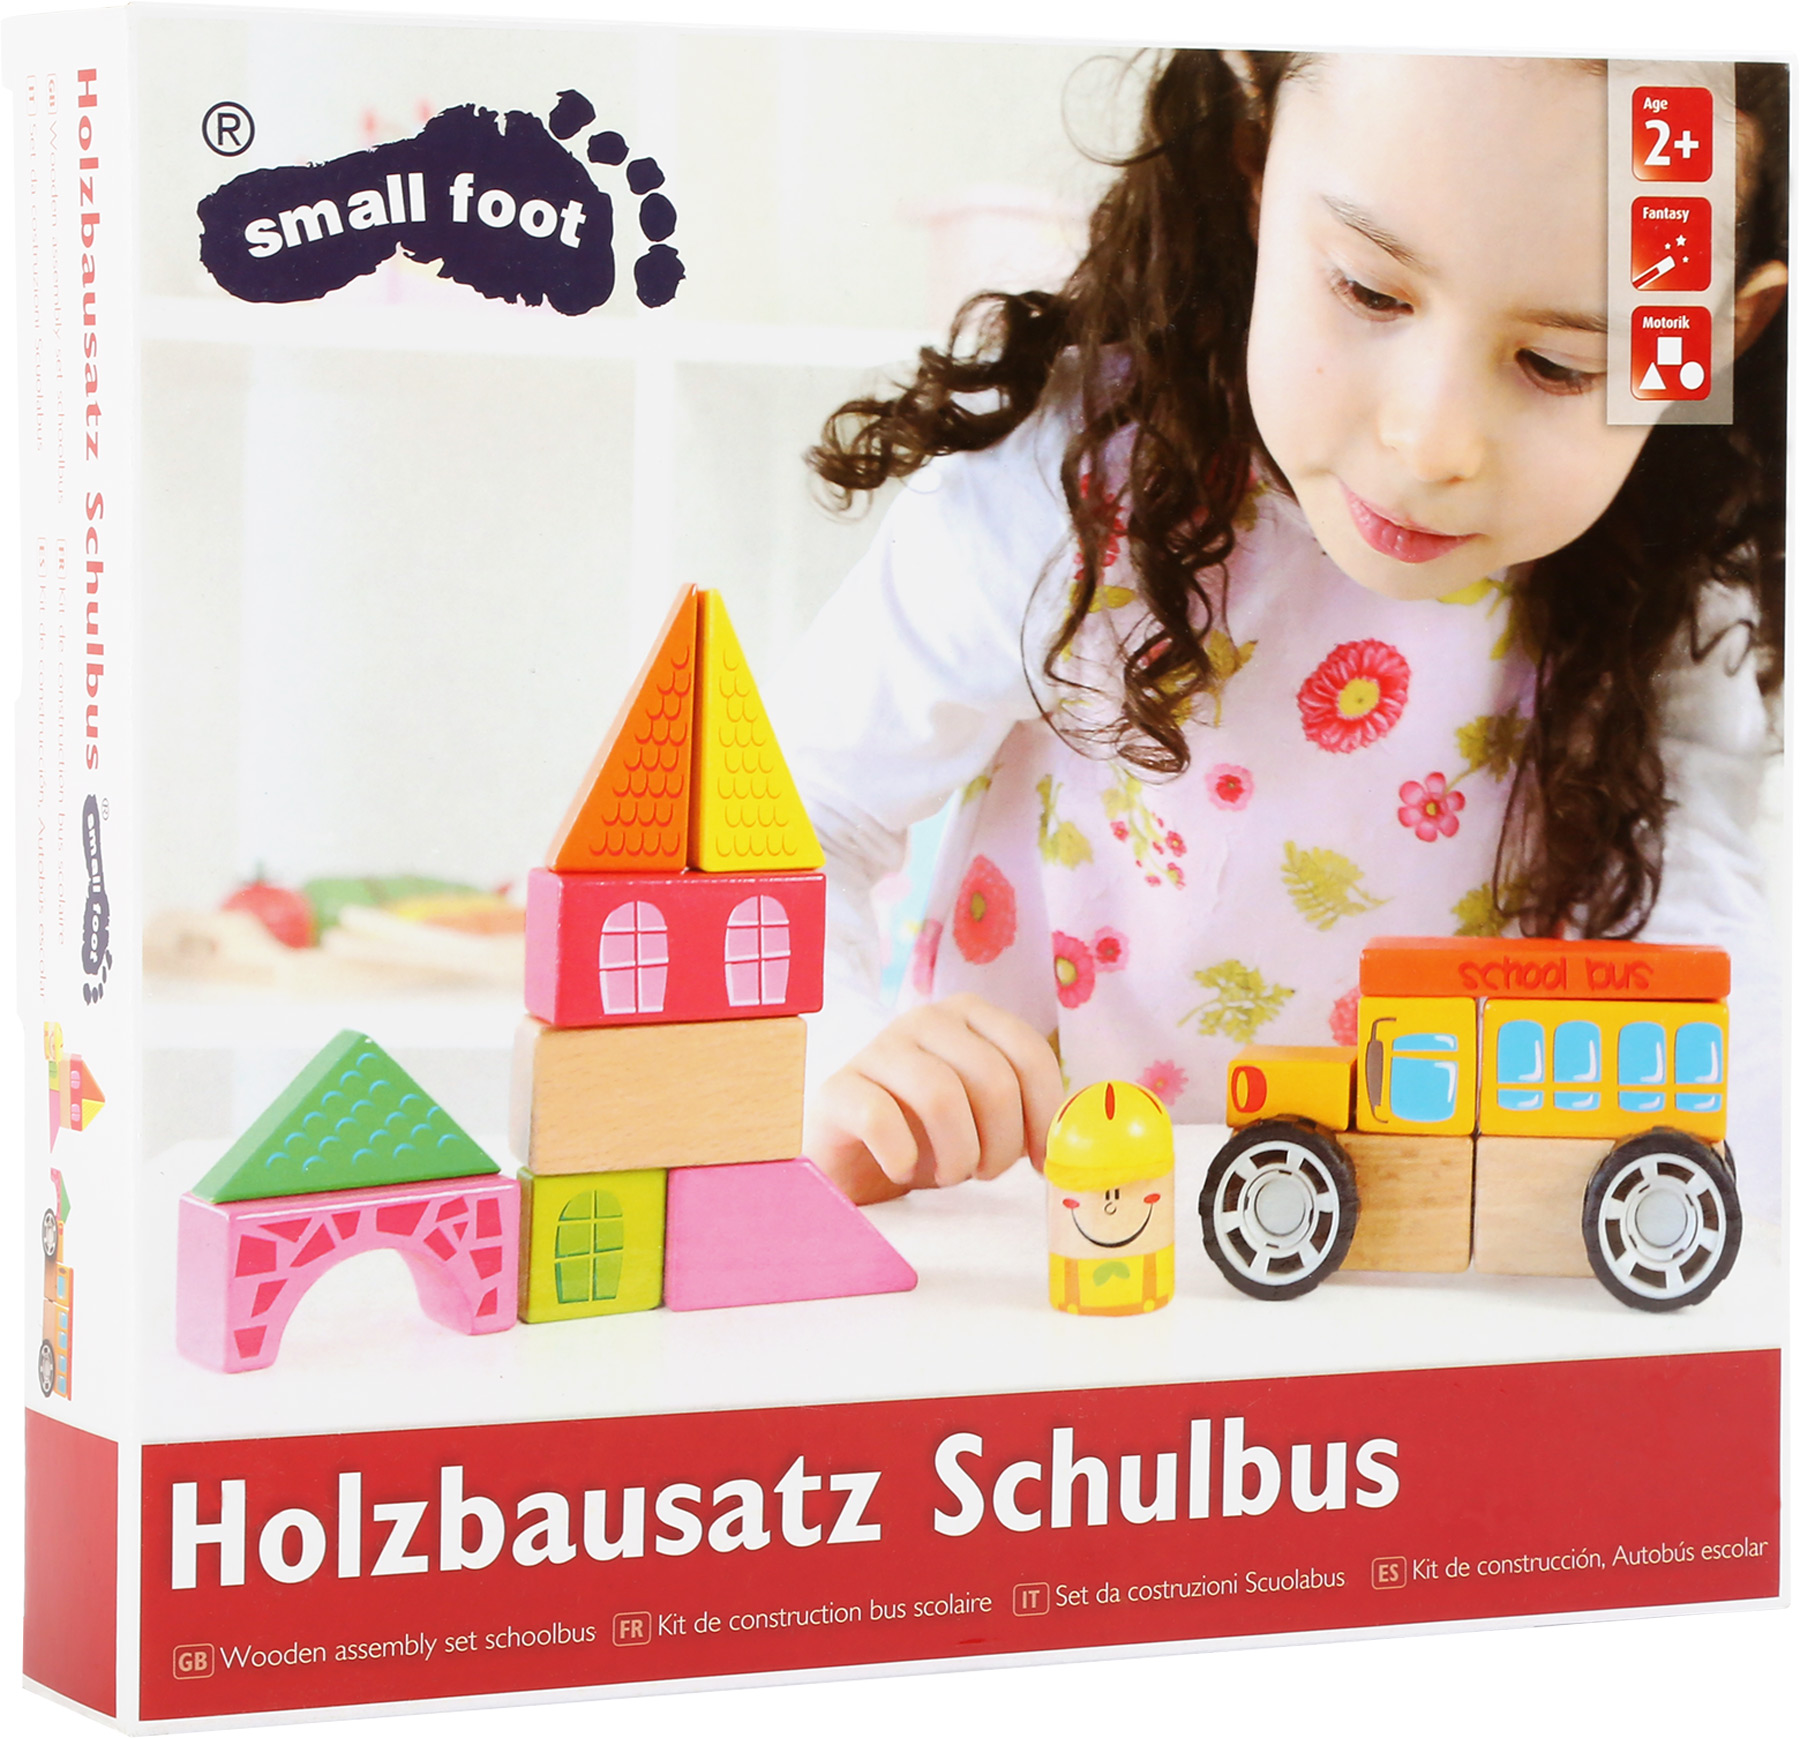 small foot company - Schulbus Holzbauklötze